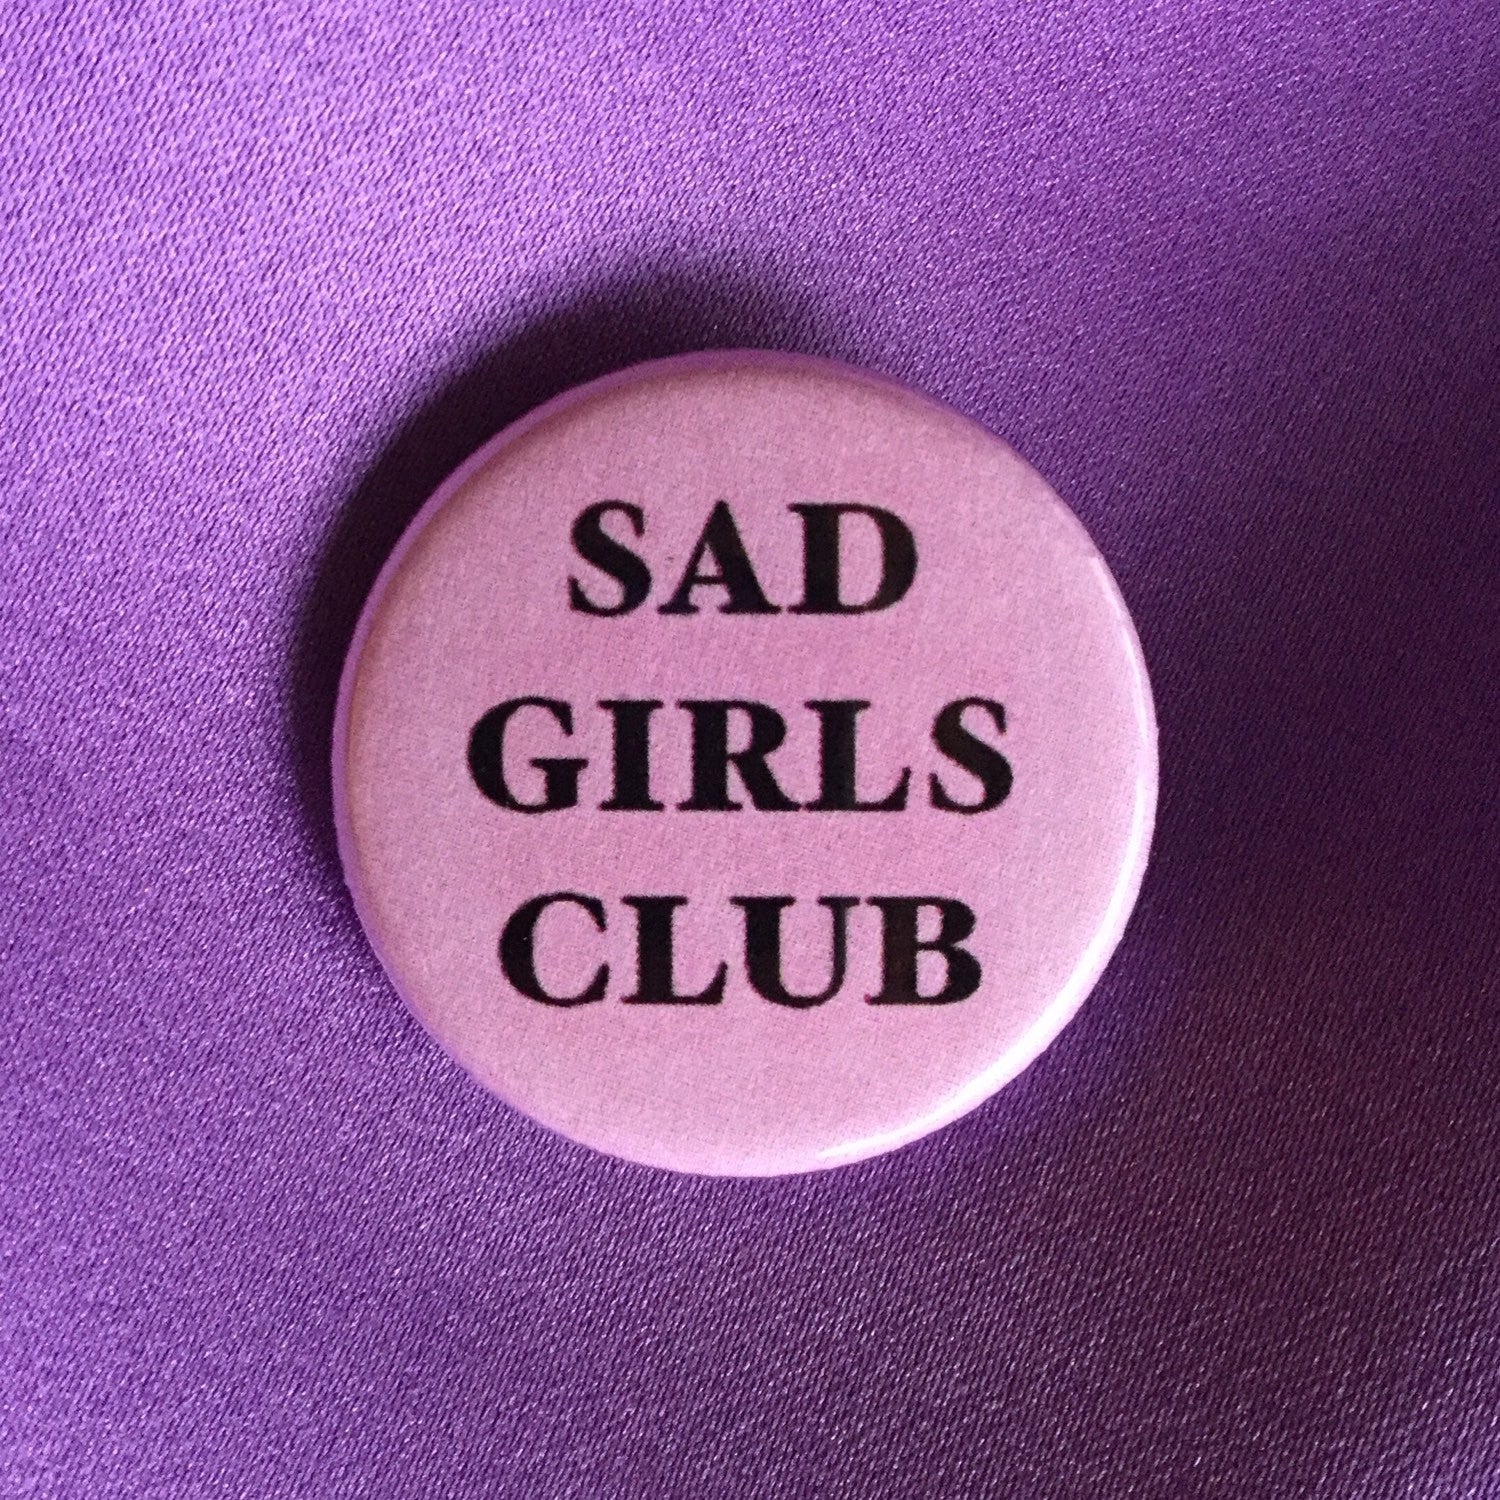 Sad girls club button - Radical Buttons